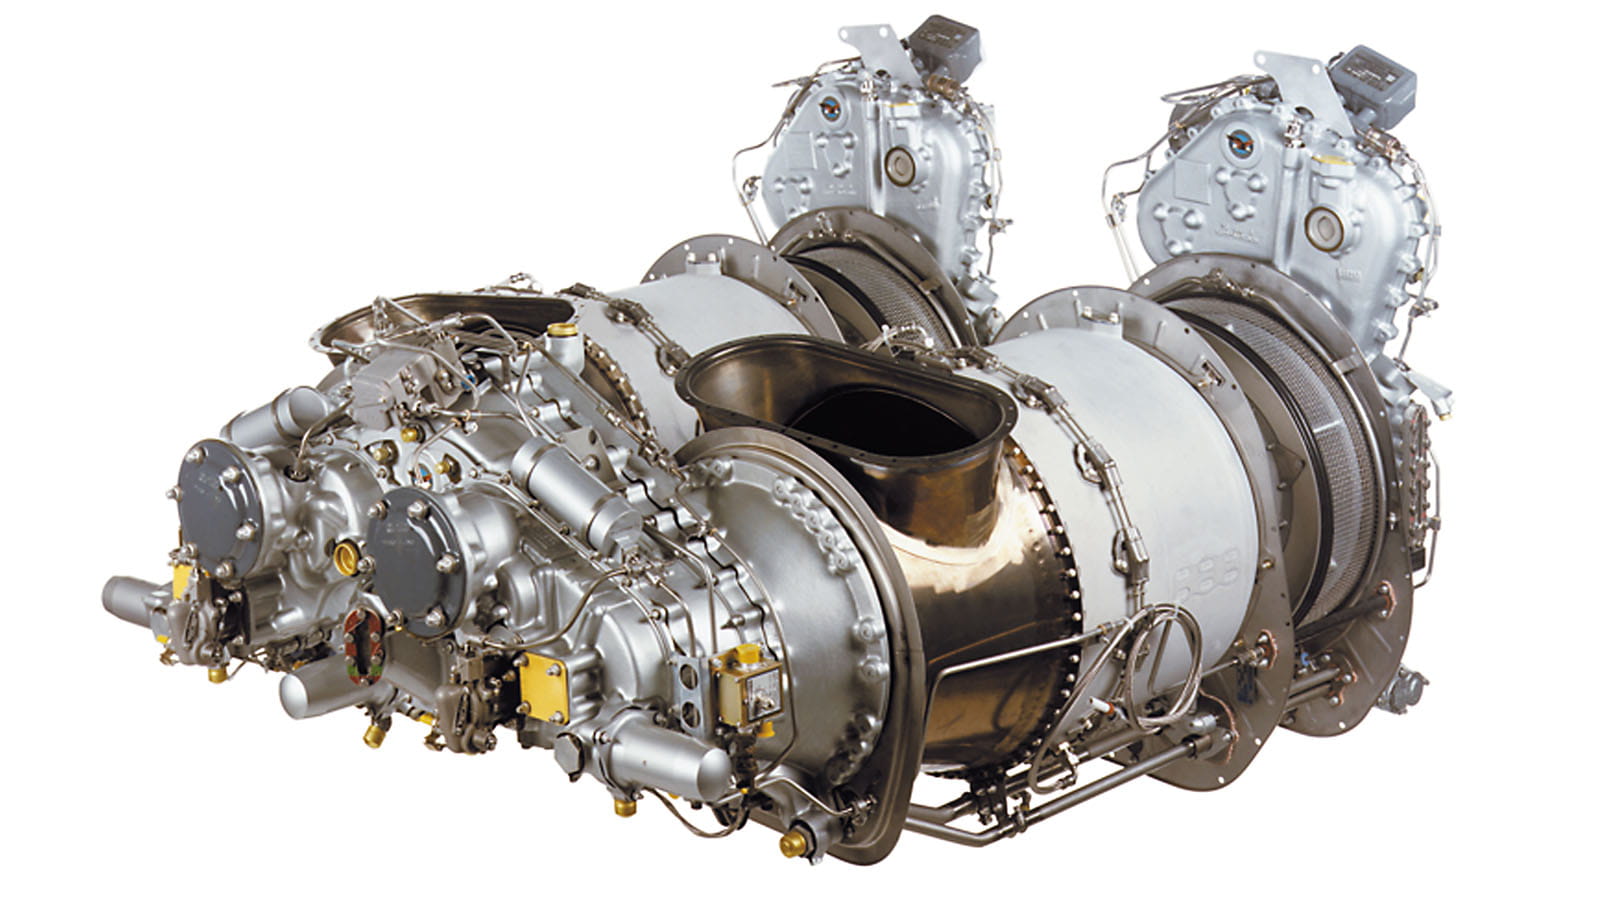 The Pratt & Whitney Canada PT6T engine.